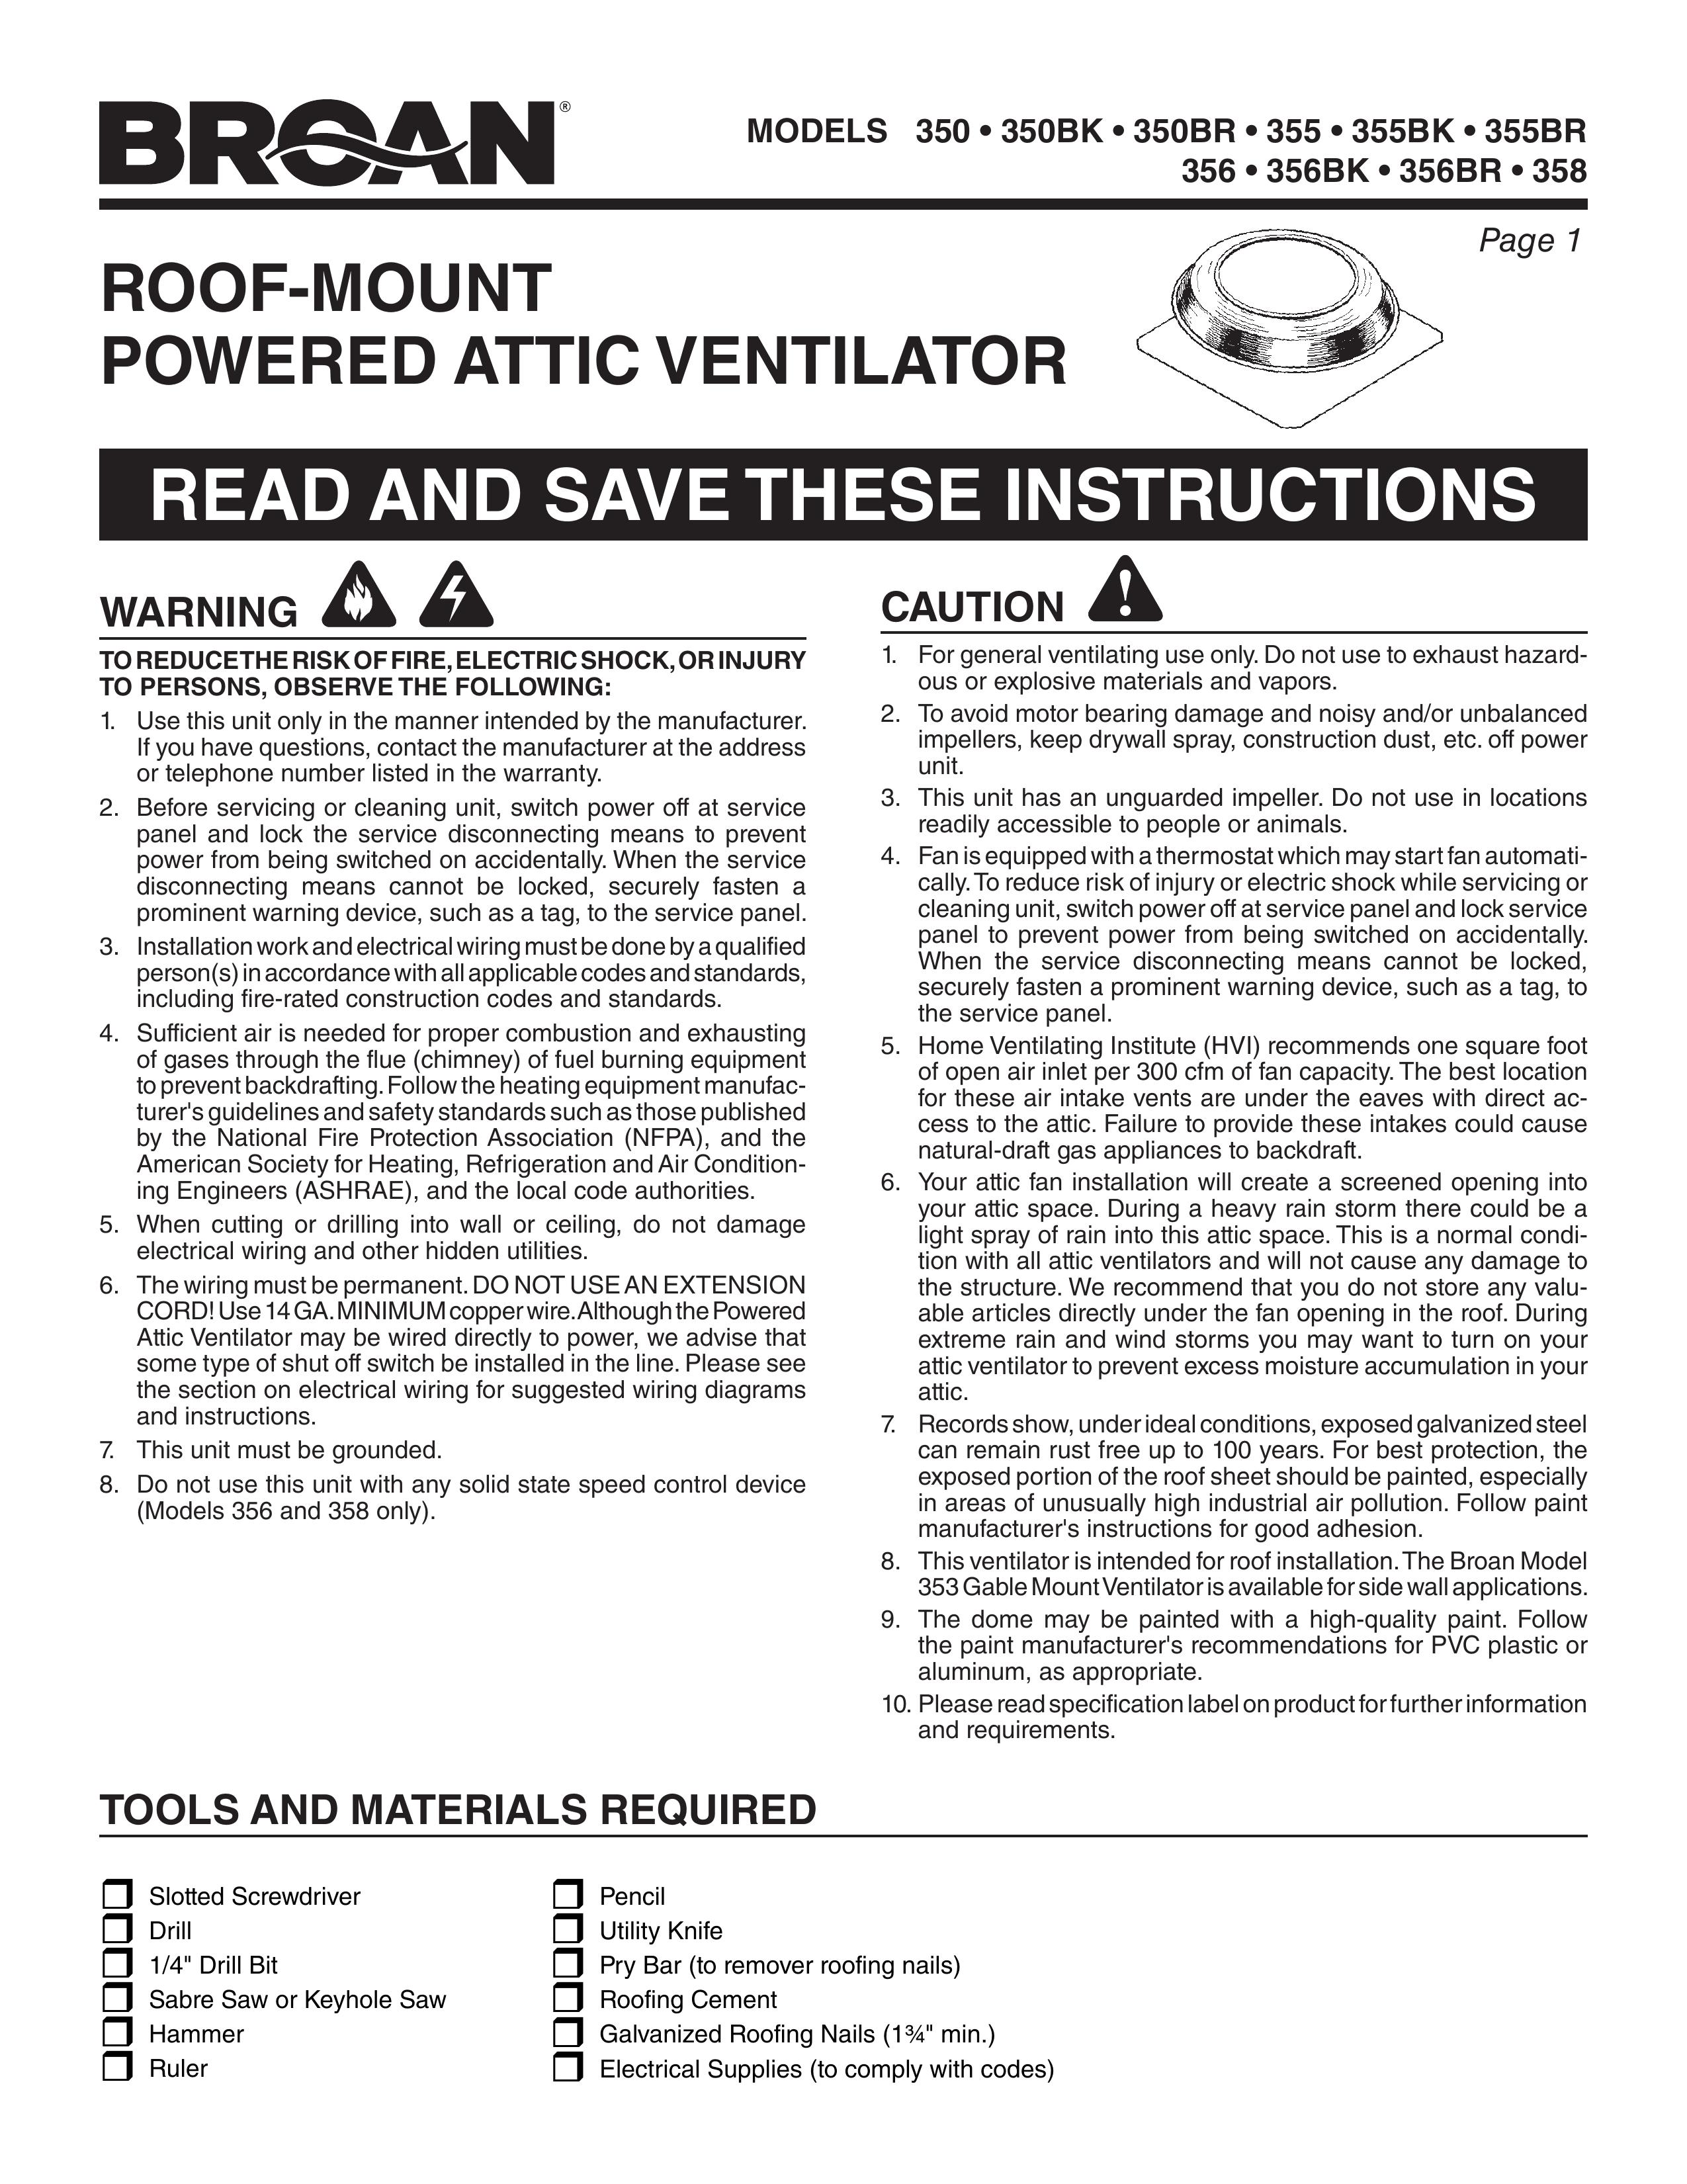 Broan 355BR Ventilation Hood User Manual